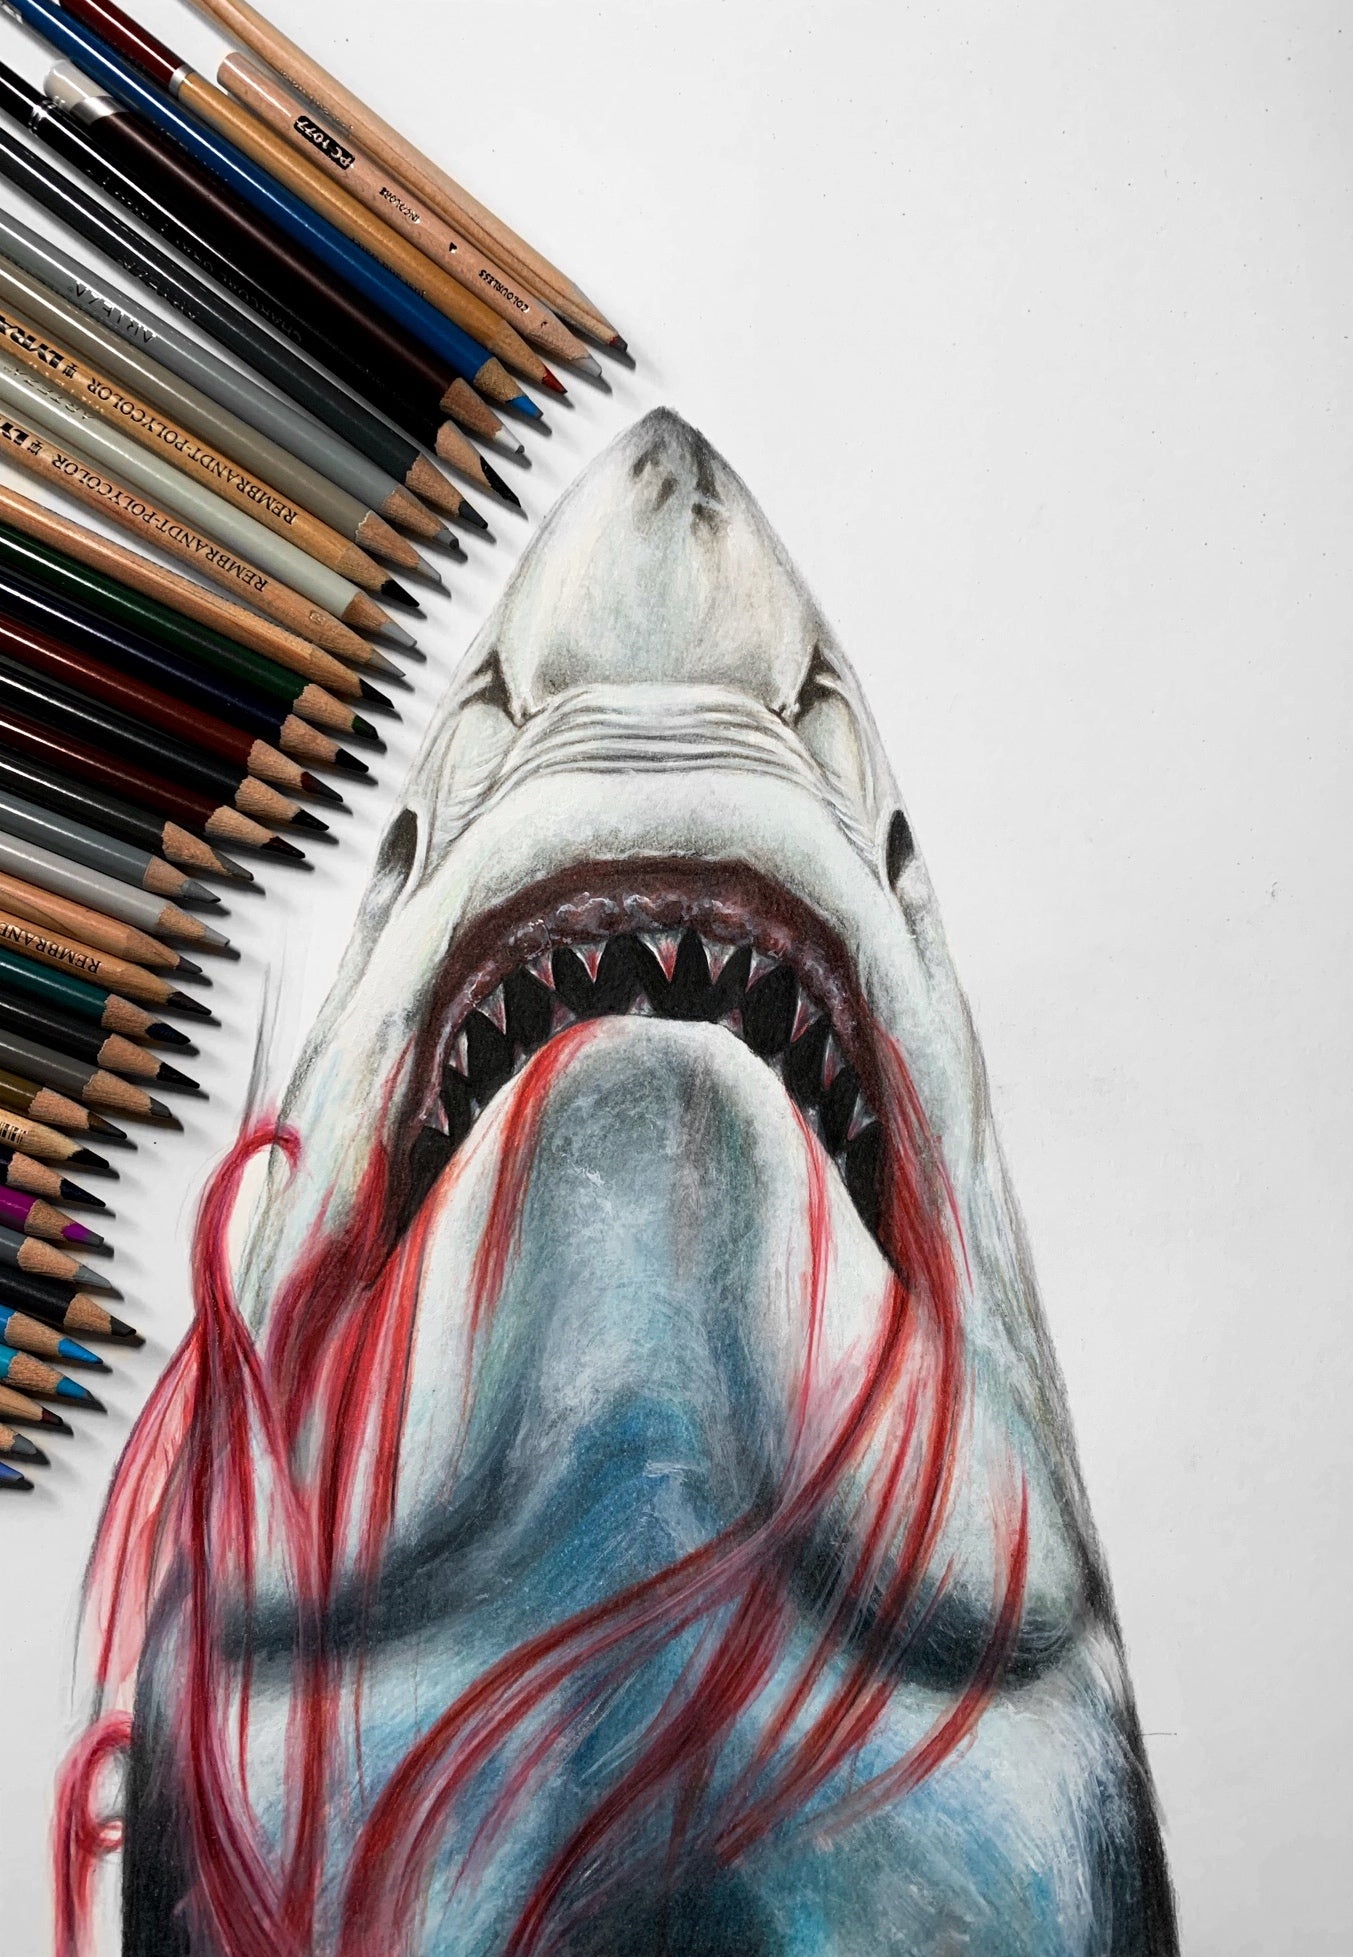 JAWS/Original